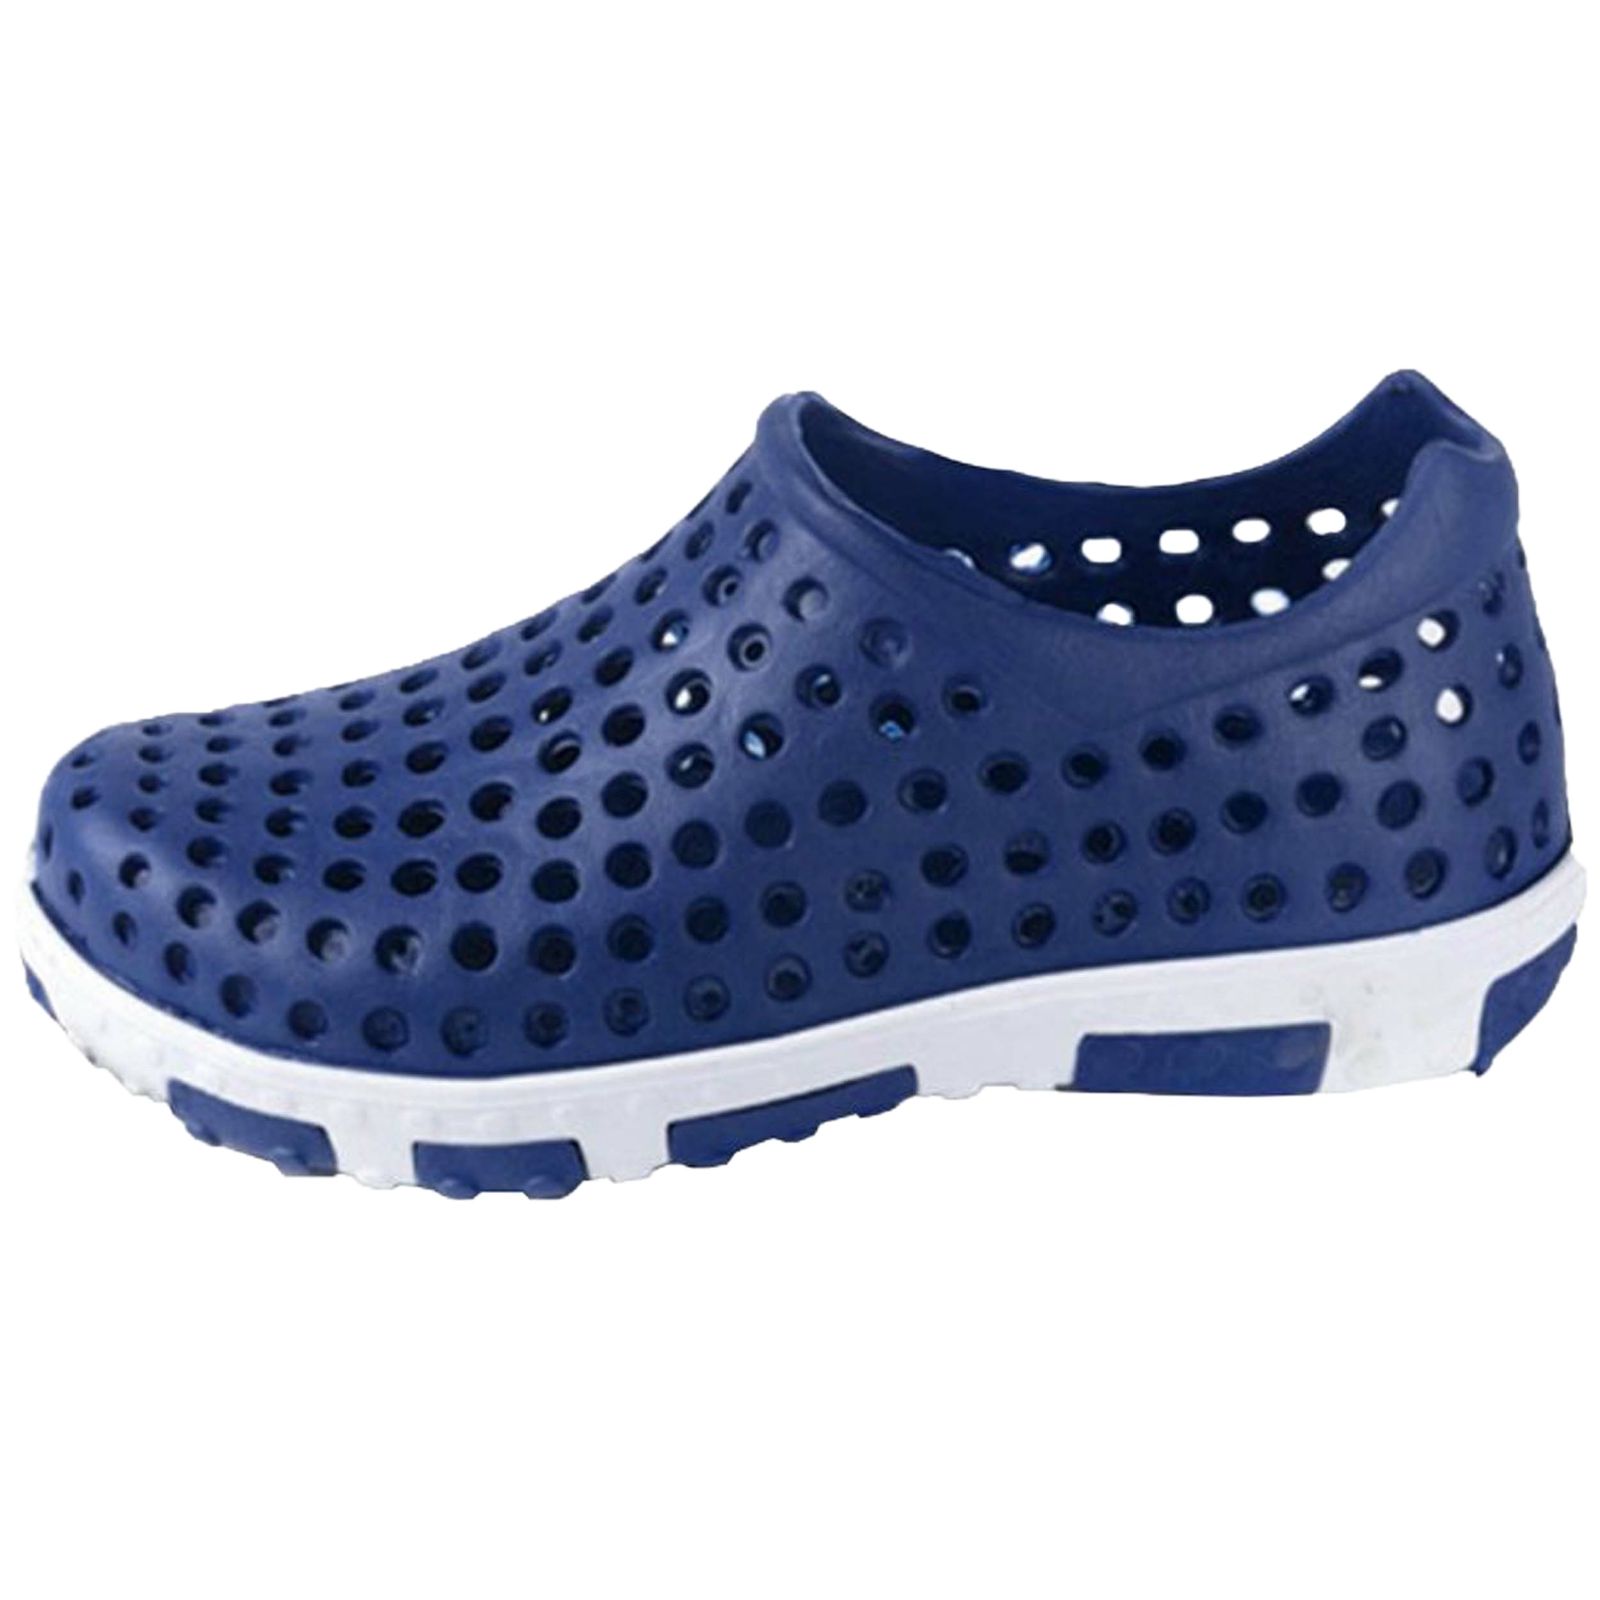 کفش ورزش های آبی مردانه نسیم مدل  کلمبیا پلاس کد NSM423 0ps -  - 1